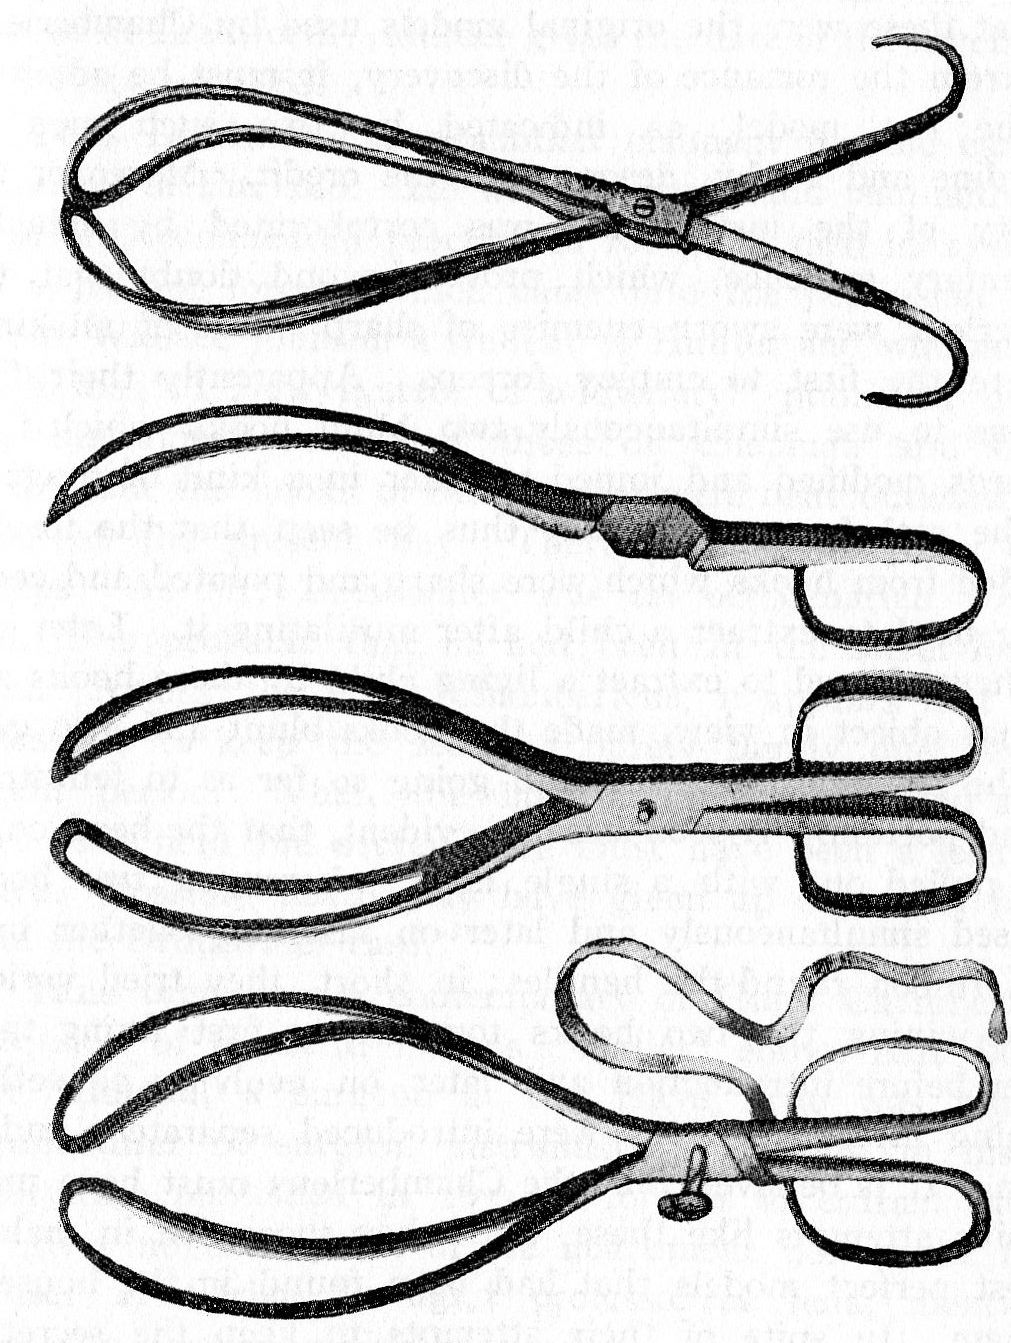 Figure 2: The Chamberlen Forceps